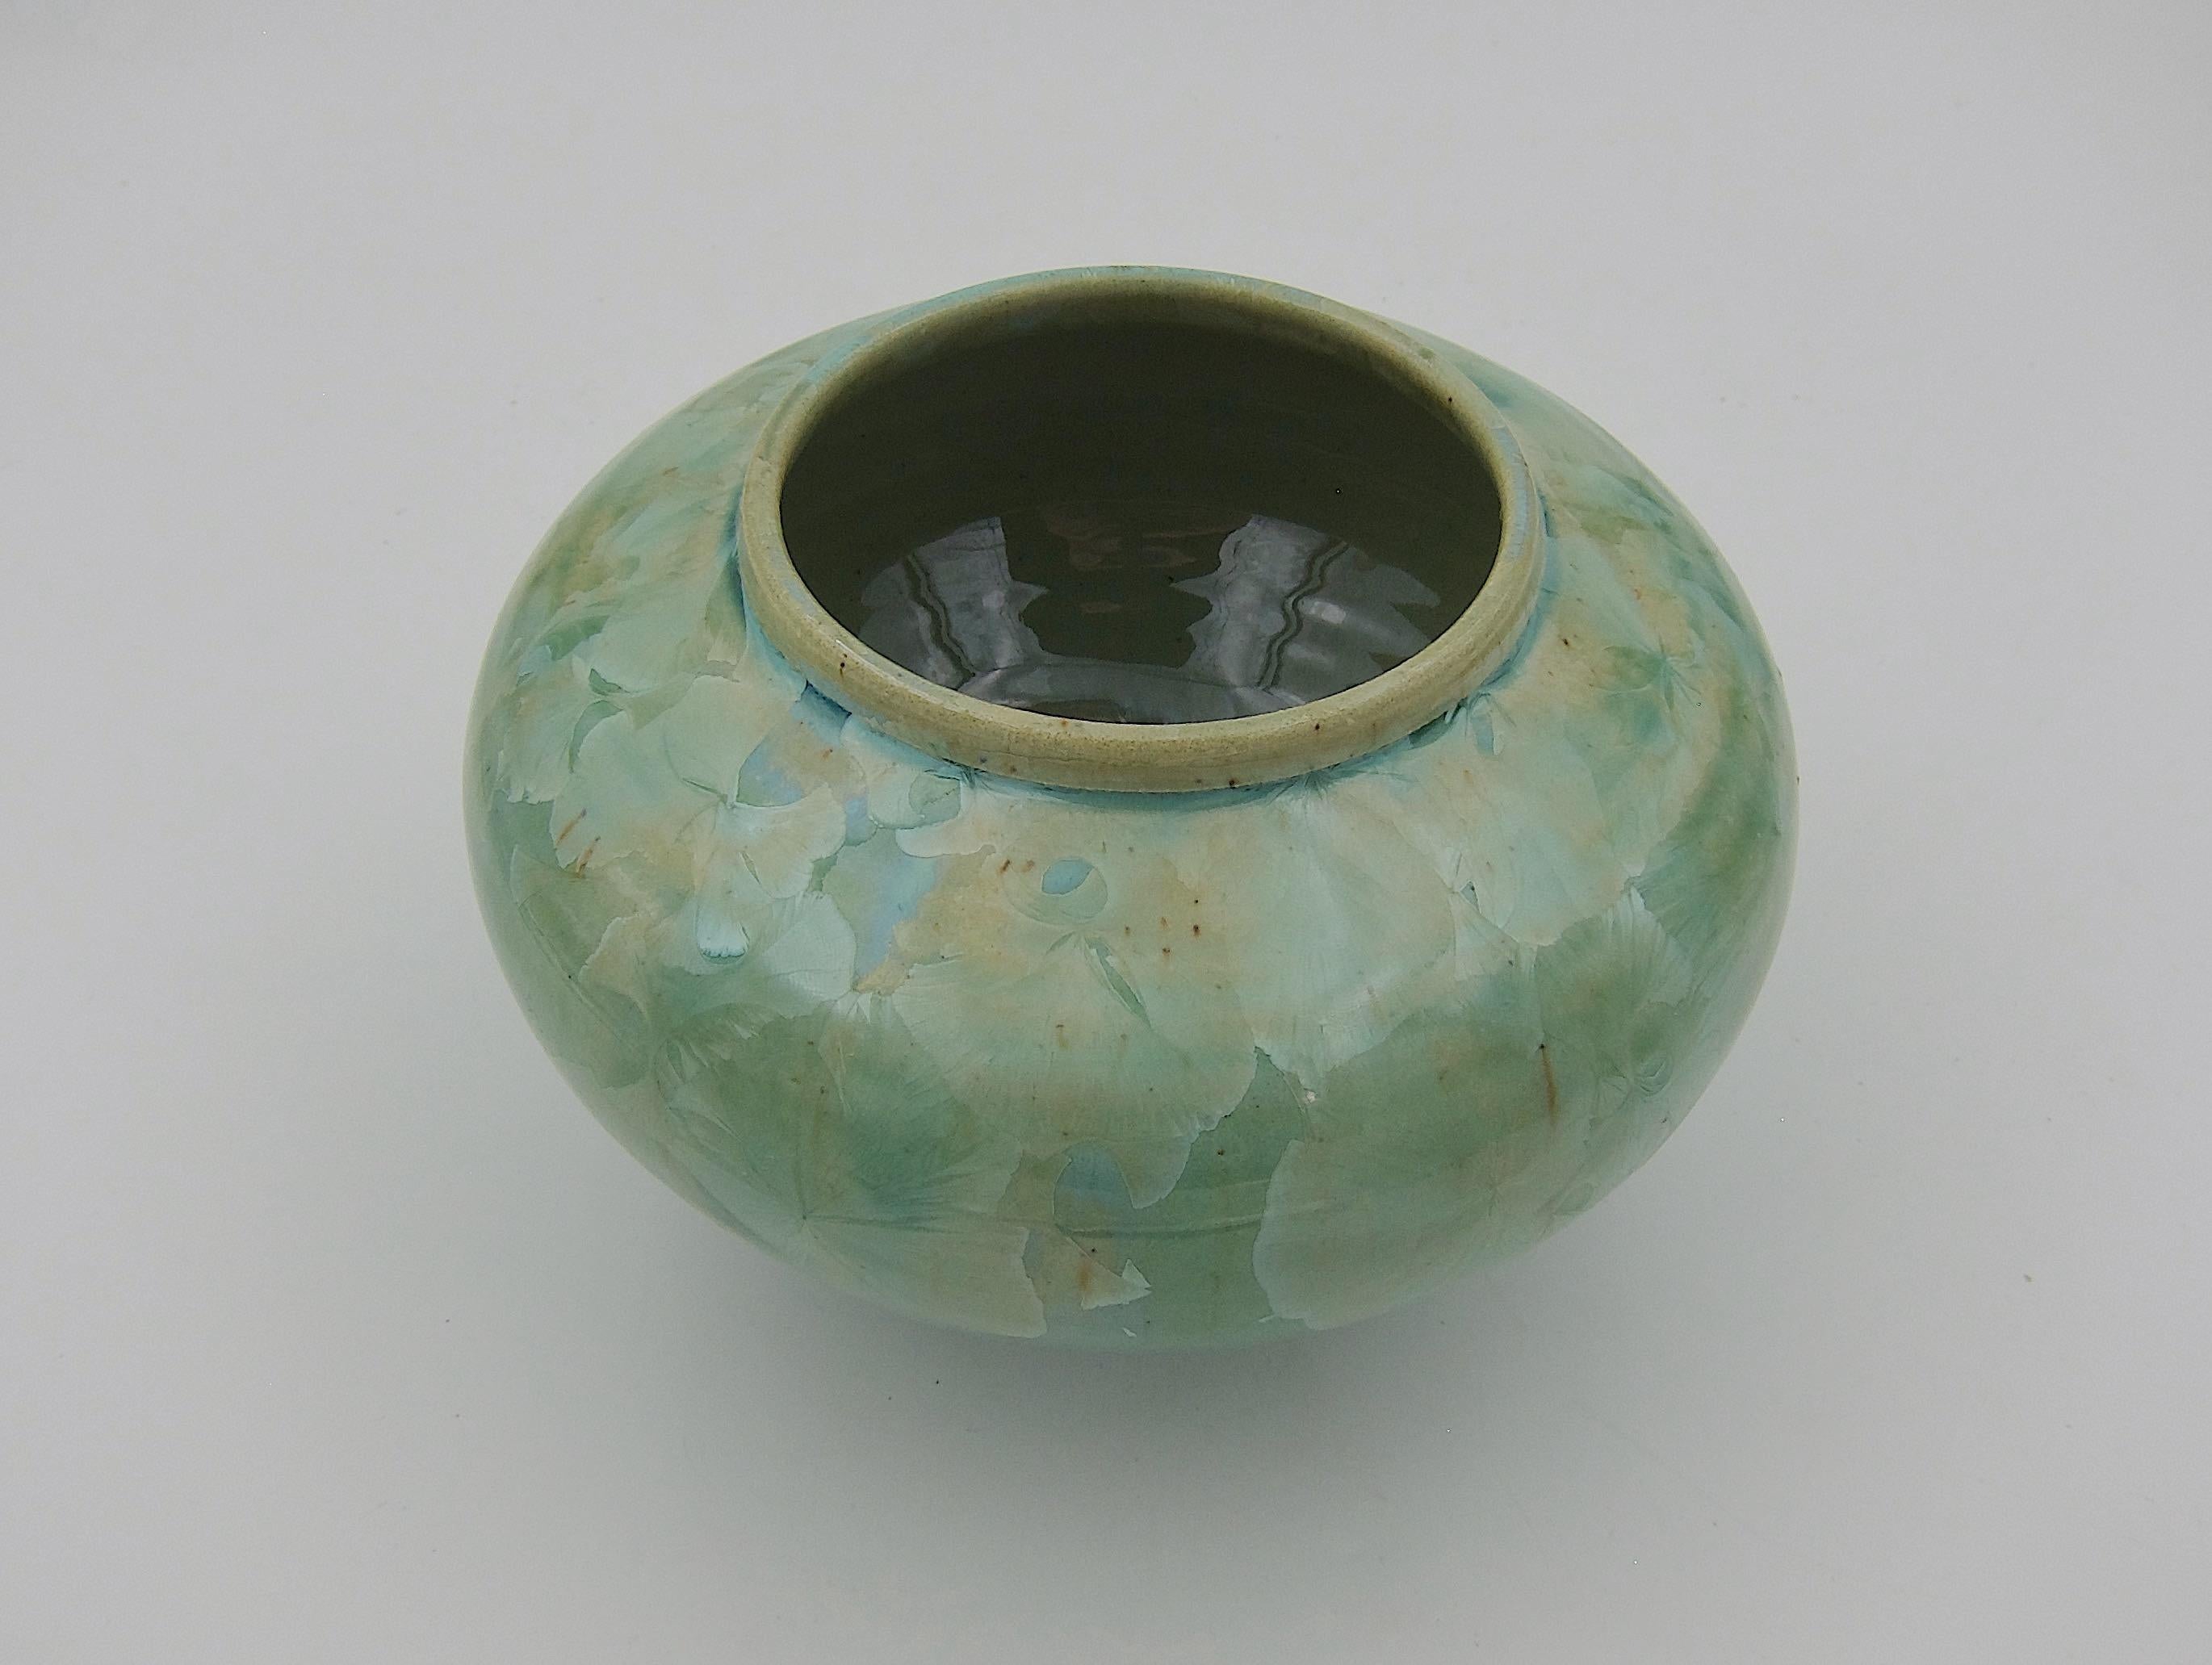 20th Century Vintage Buckingham Art Pottery Vase with Green Crystalline Glaze, 1994